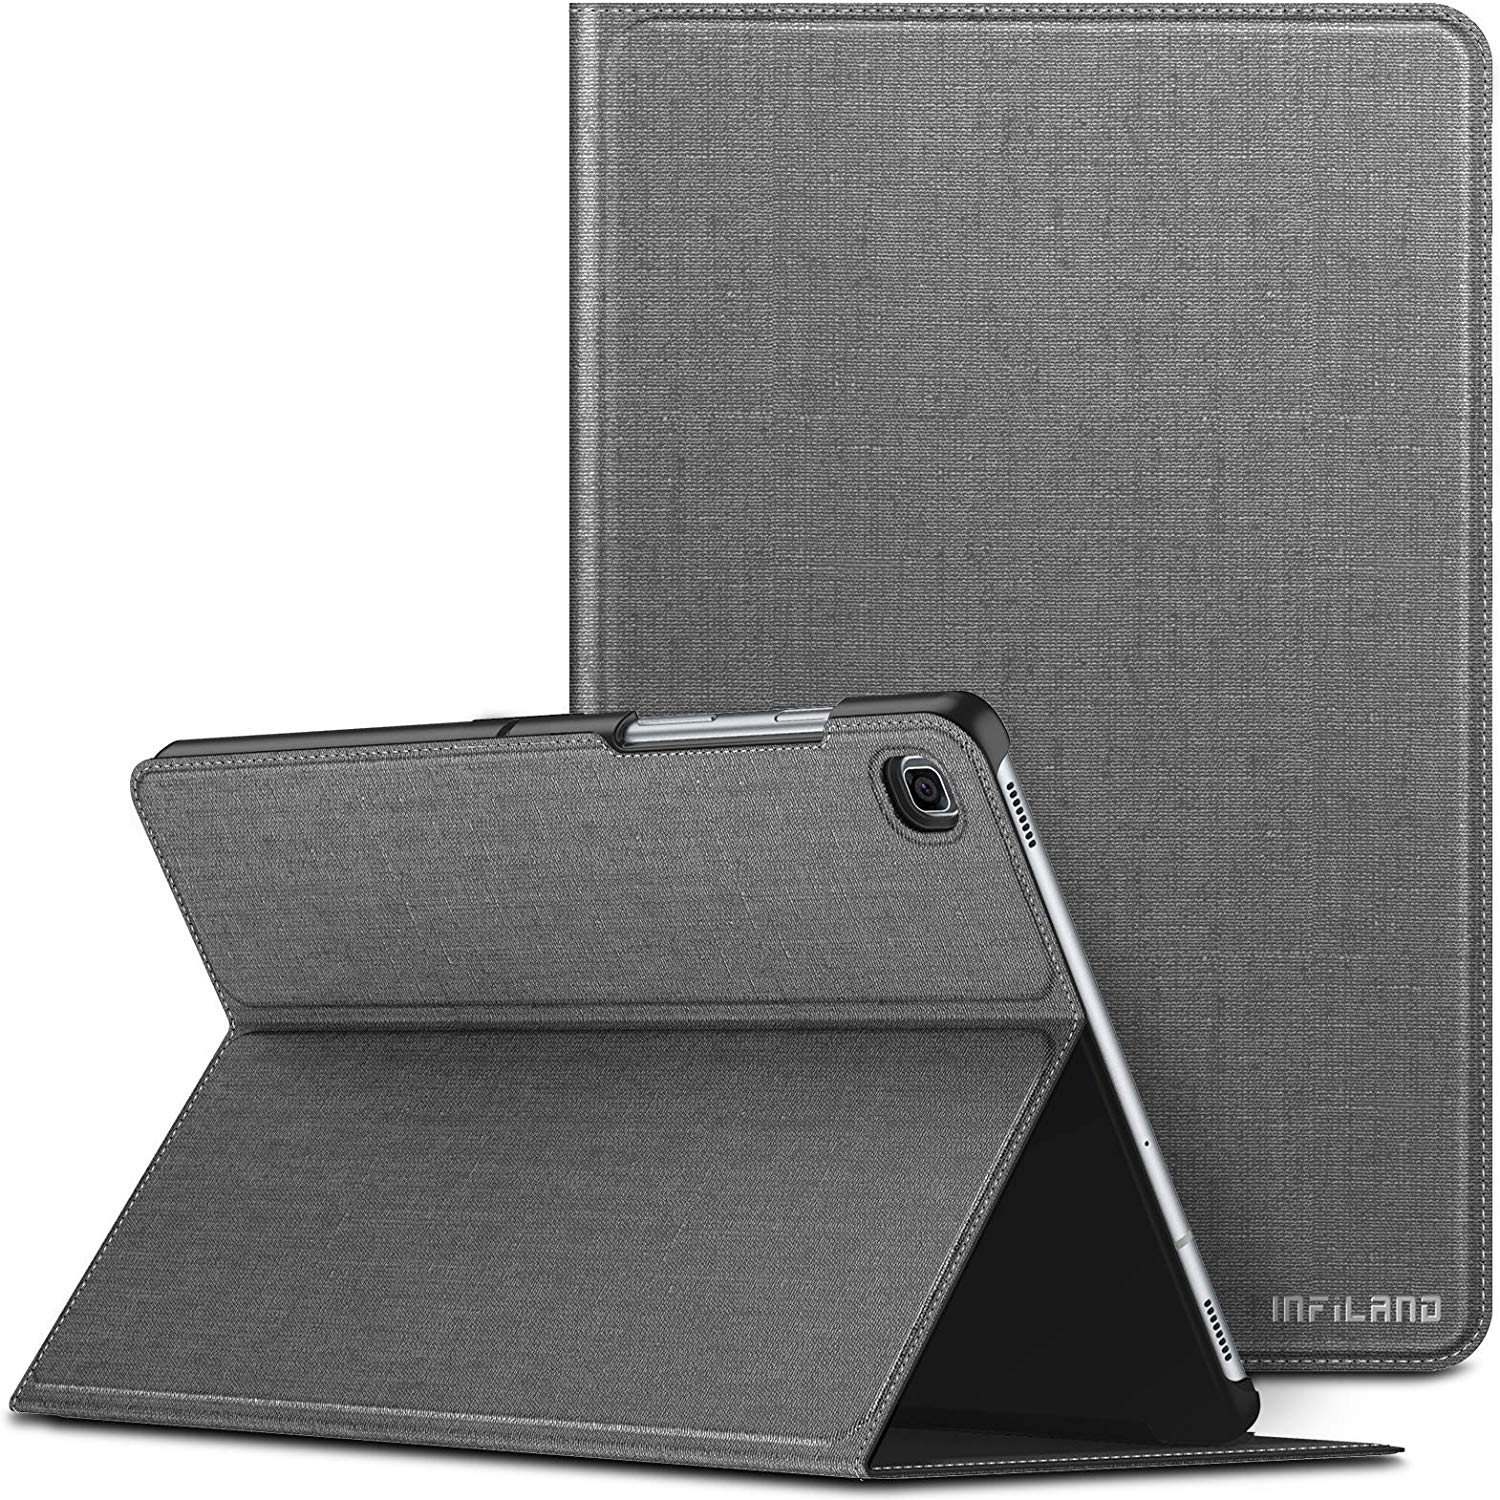 Infiland Galaxy Tab S5e